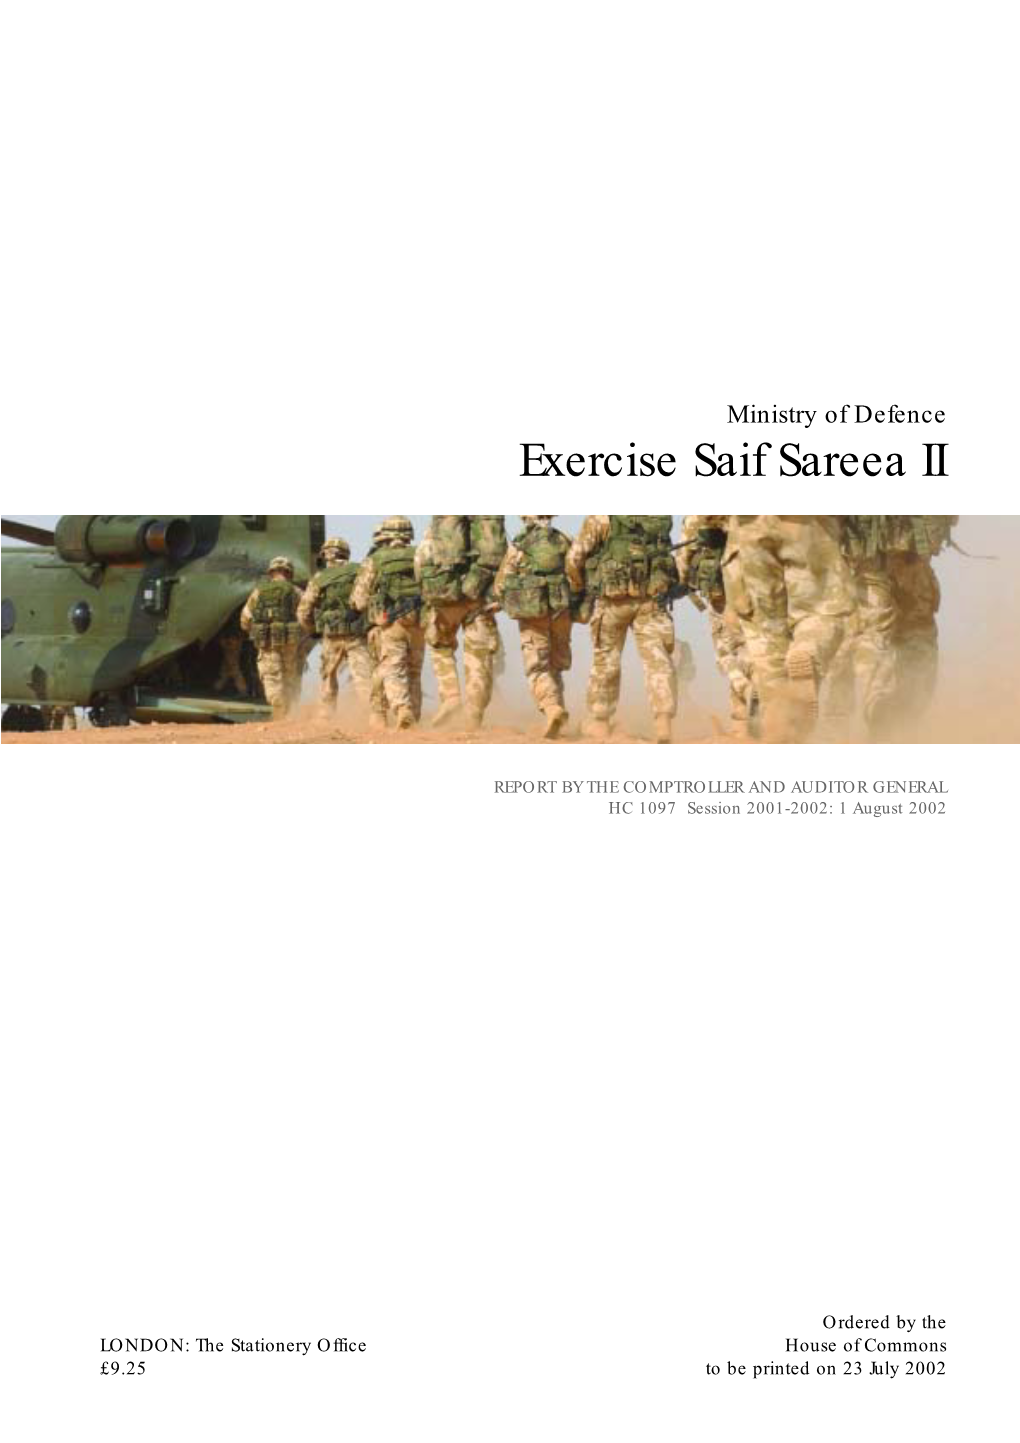 Exercise Saif Sareea II